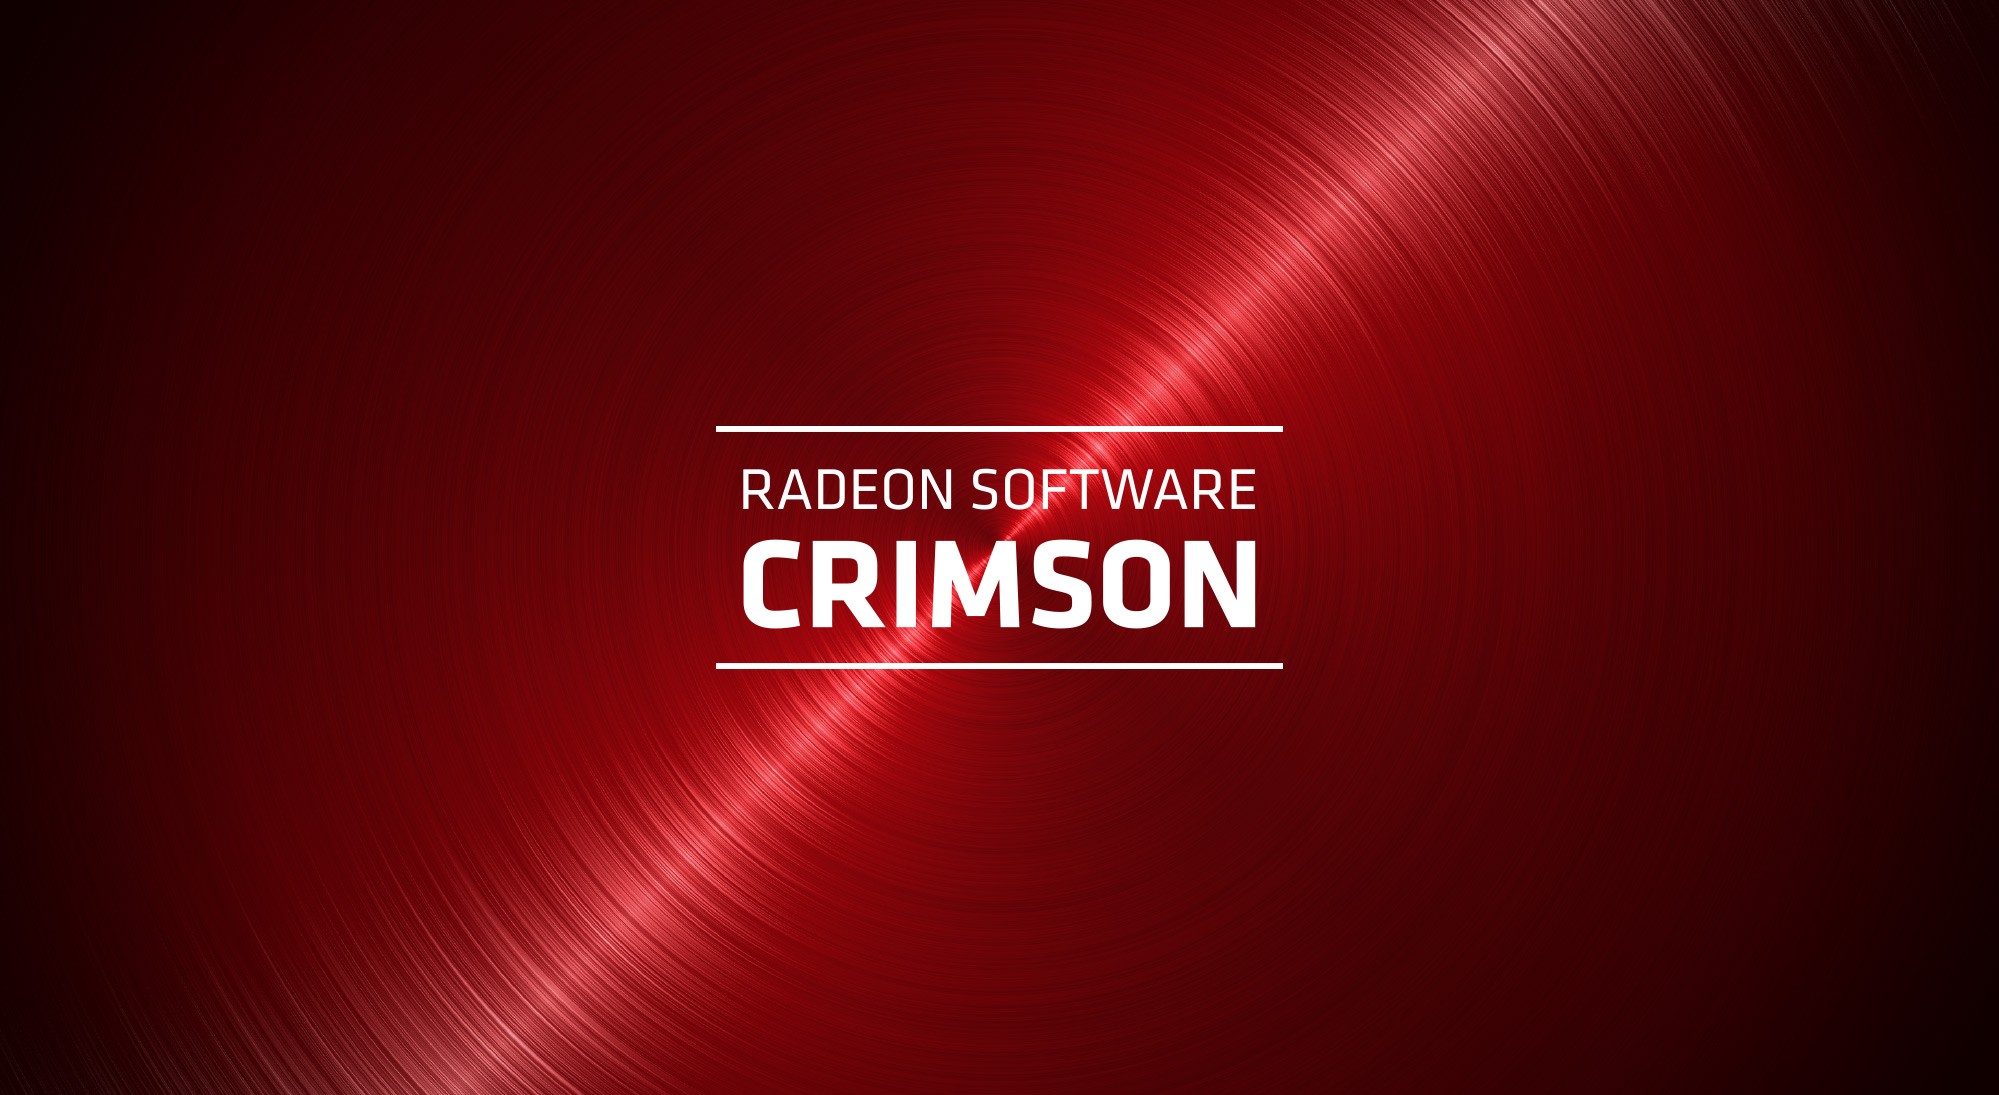 AMD Releases Radeon Crimson Edition 16.10.1 Driver, Optimizes Gear of War 4, Mafia III, and More